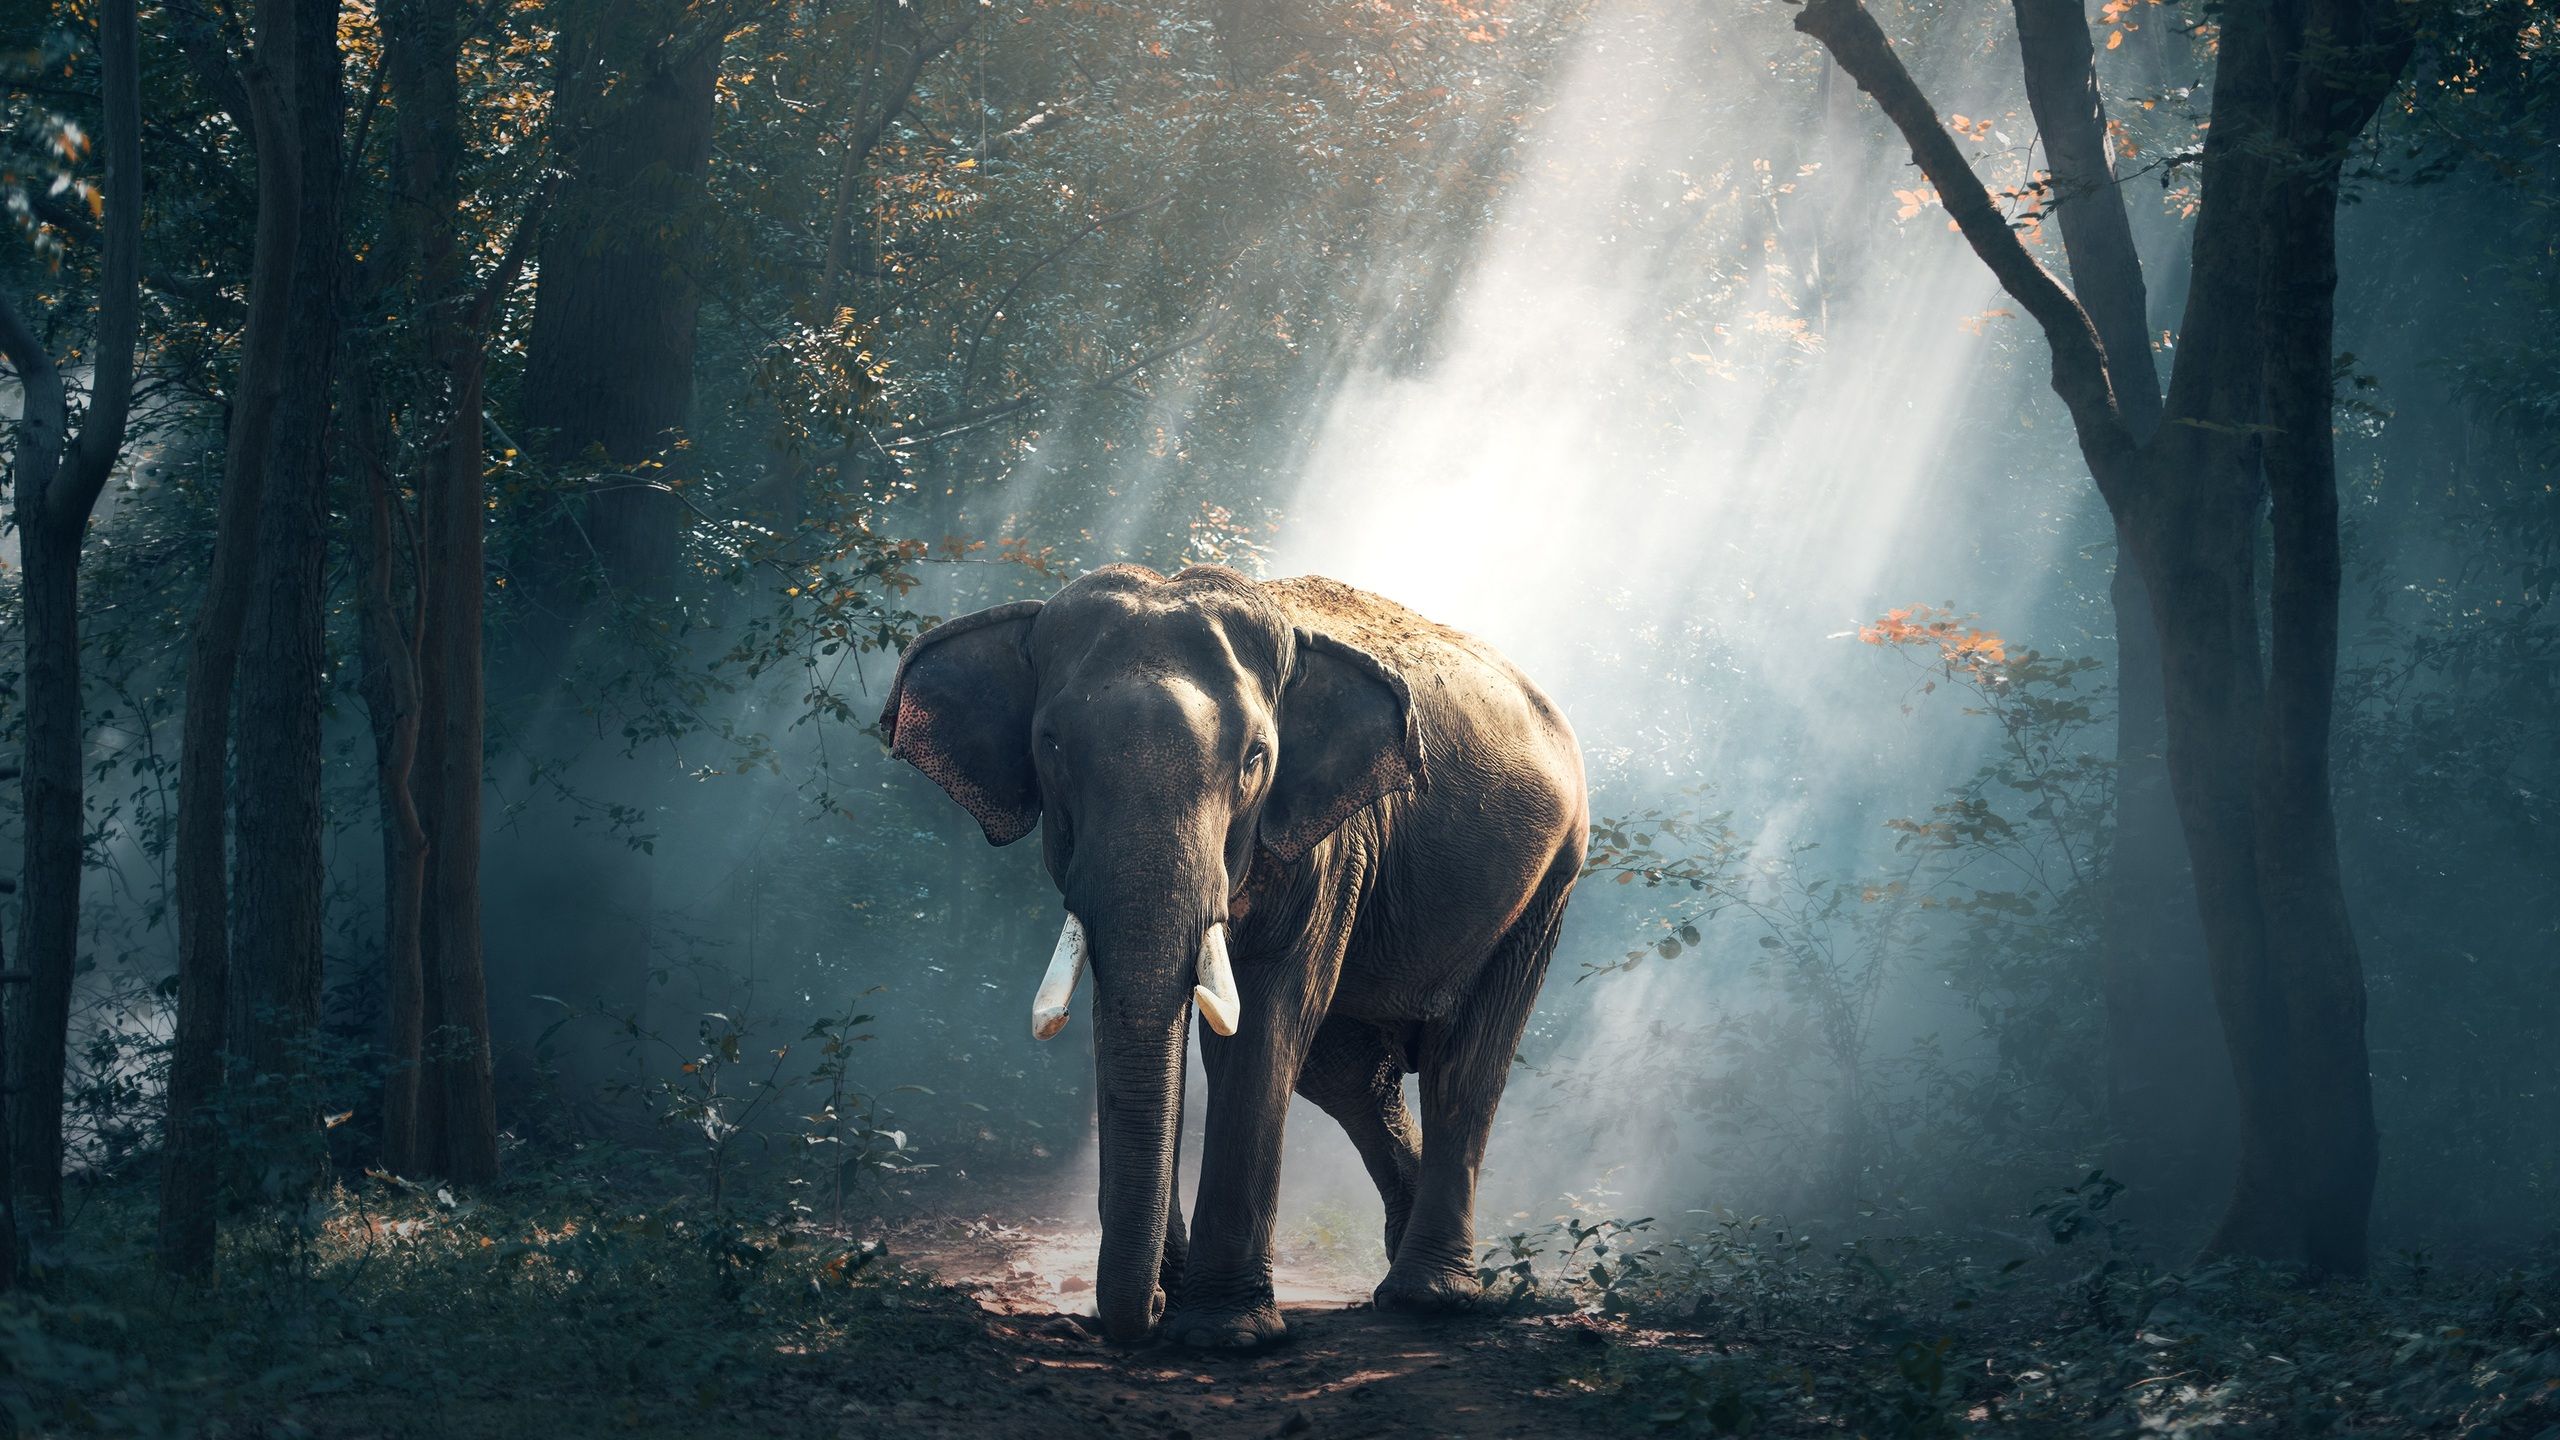 Elephant 1440P Resolution HD 4k Wallpaper, Image